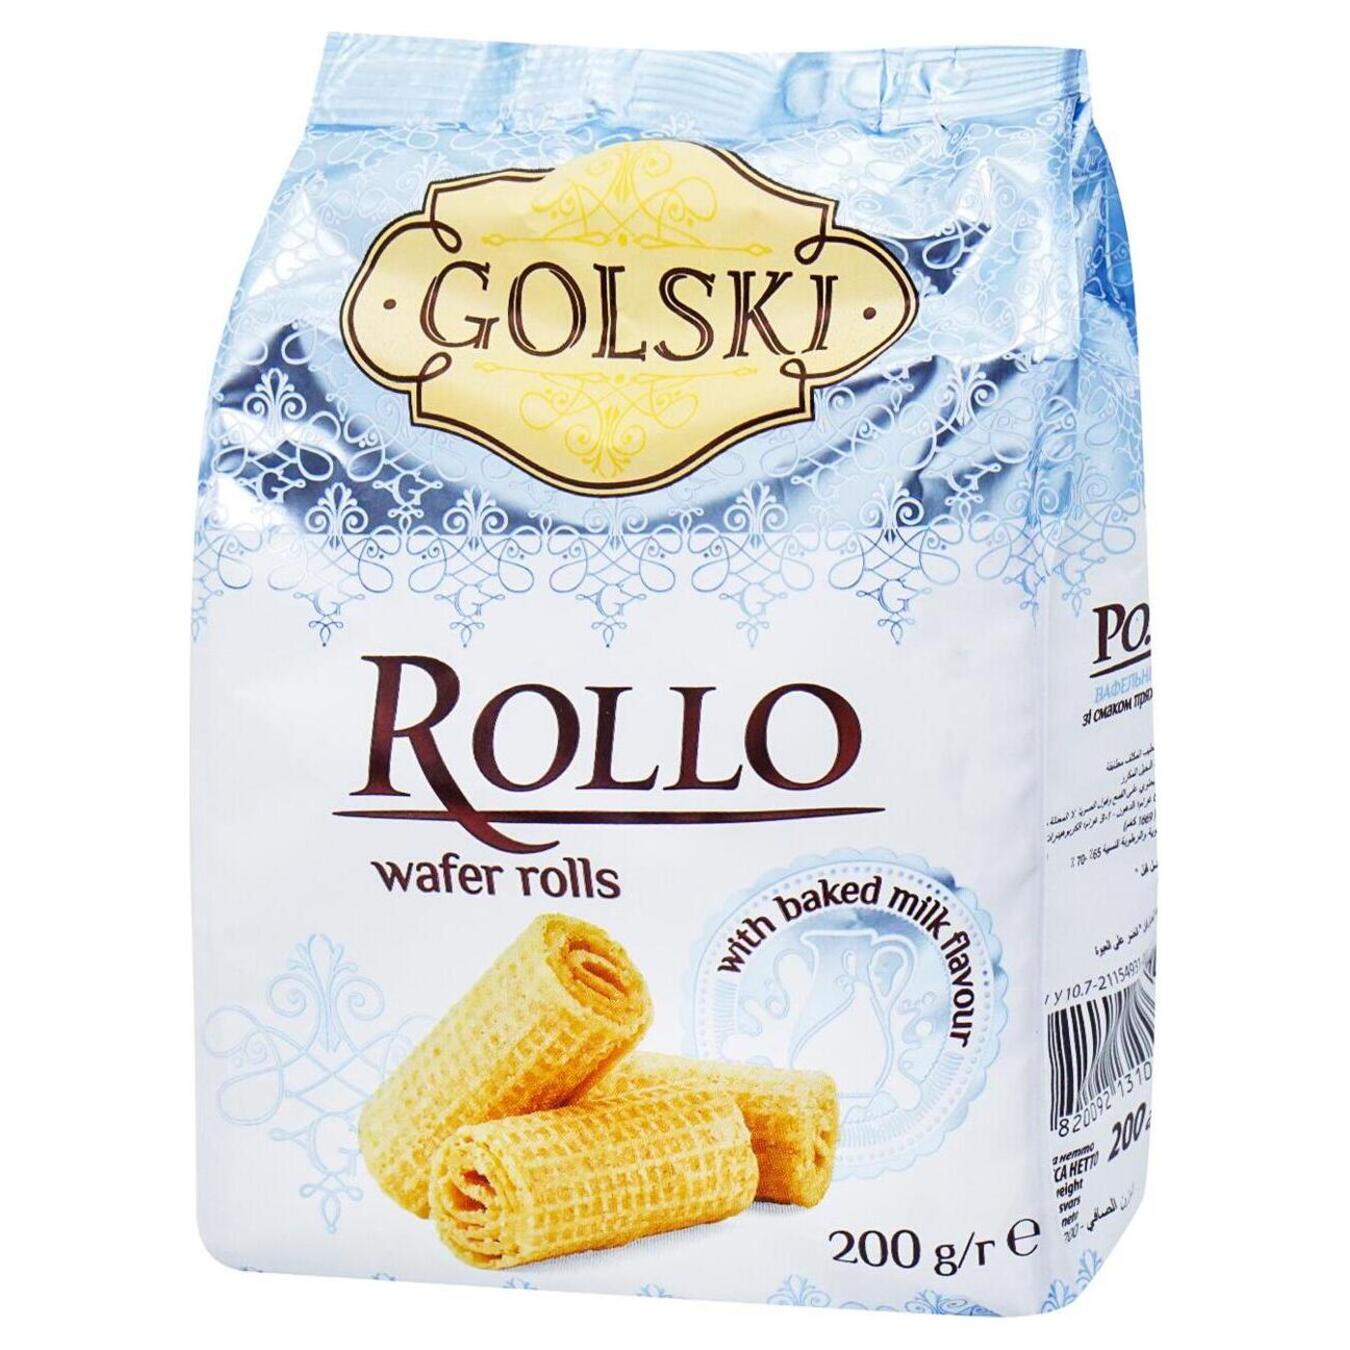 Waffles Golski rollo rolls with condensed milk 200g